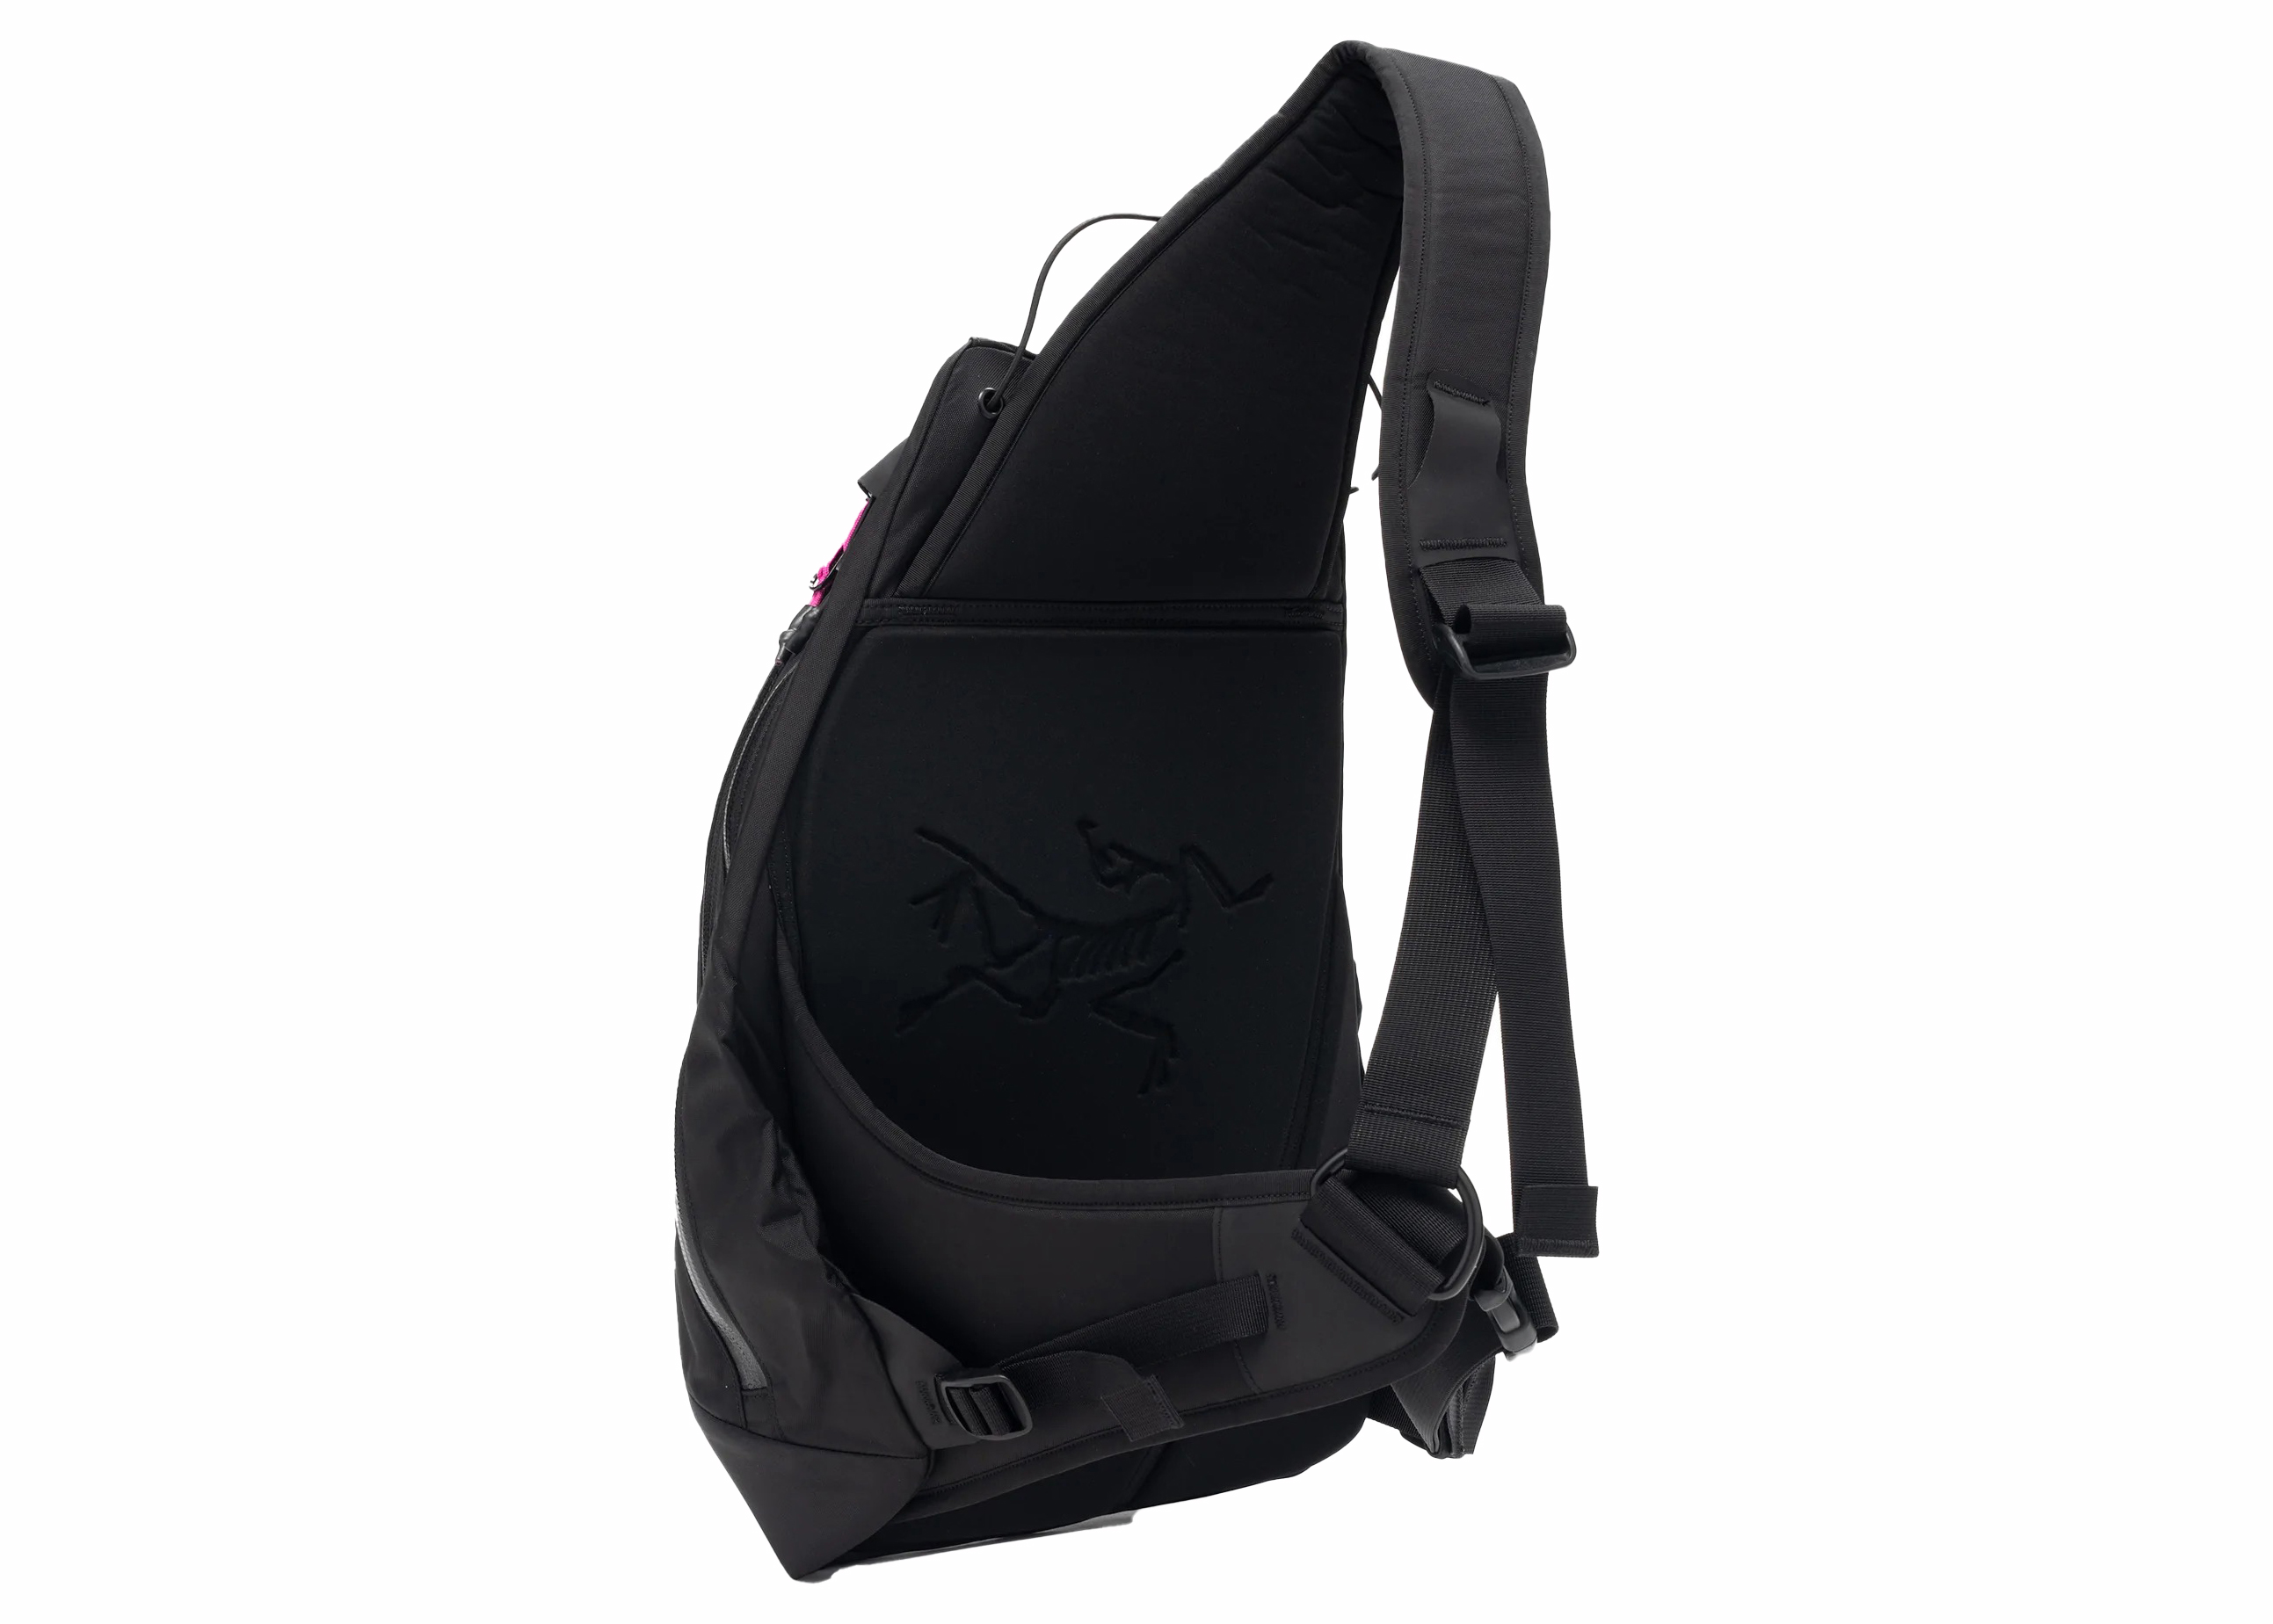 Arc'teryx Quiver Crossbody Pack Black/Ultraviolet - FW22 - US